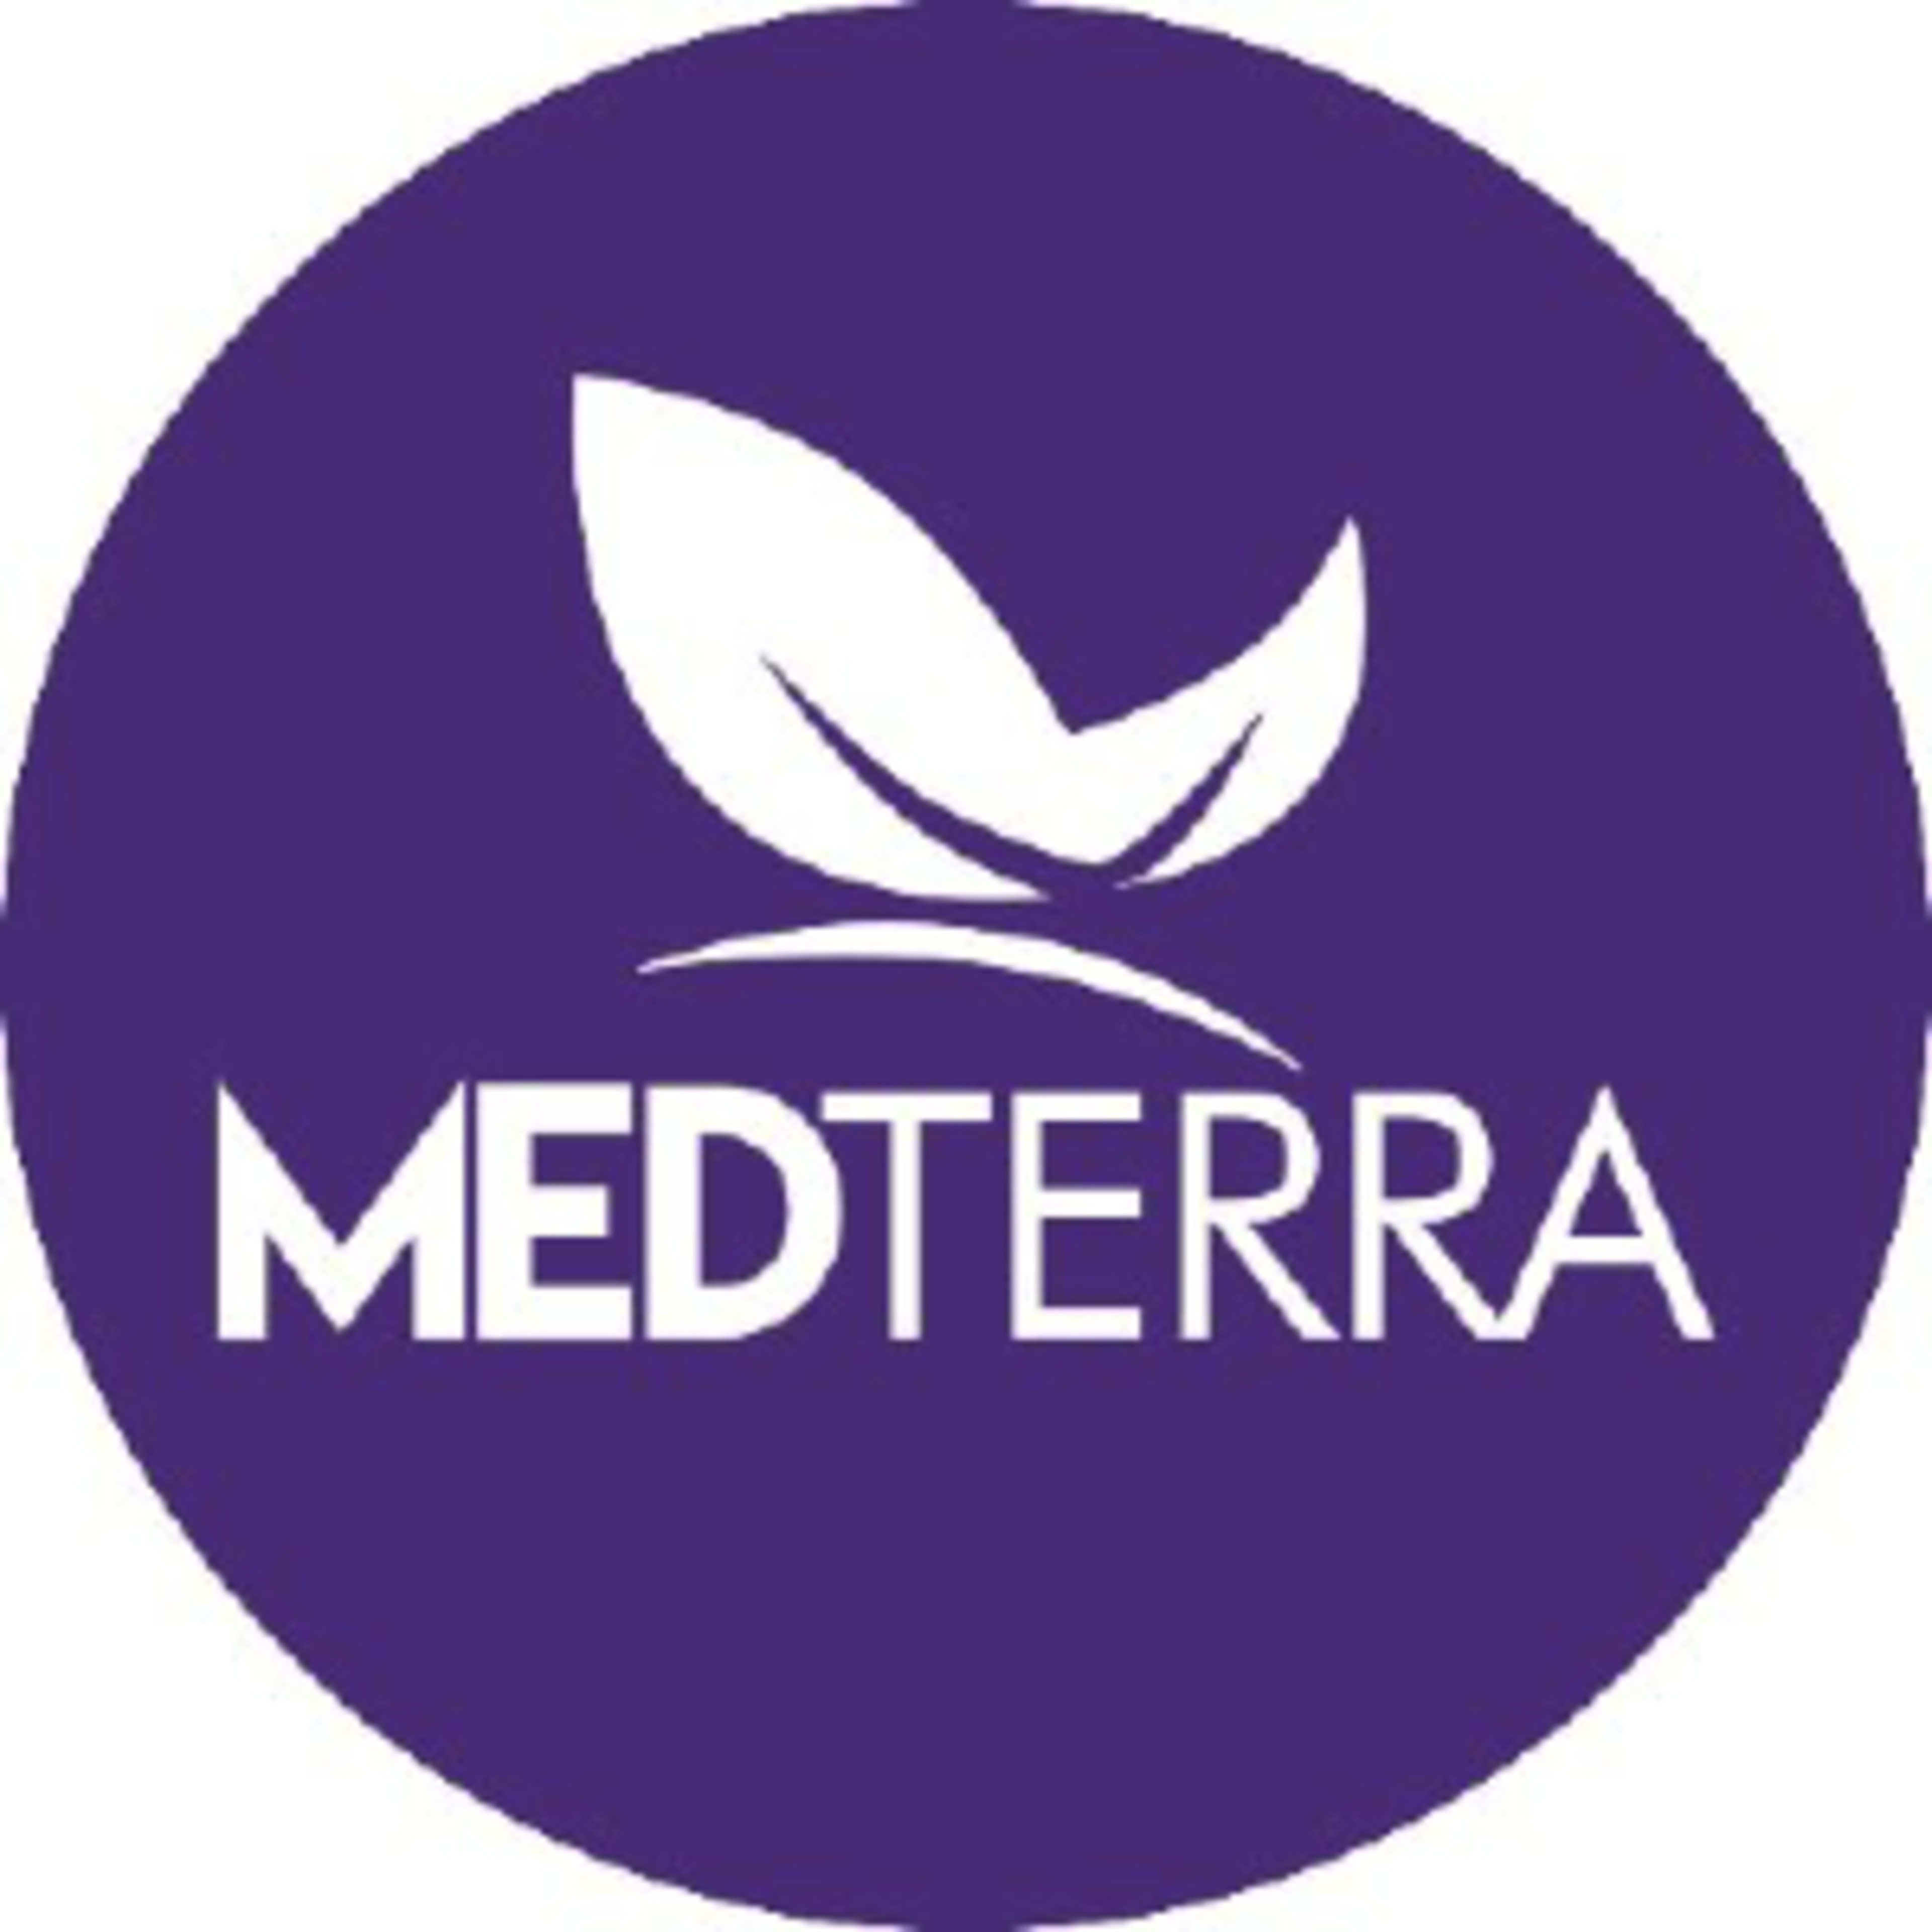 Medterra Code